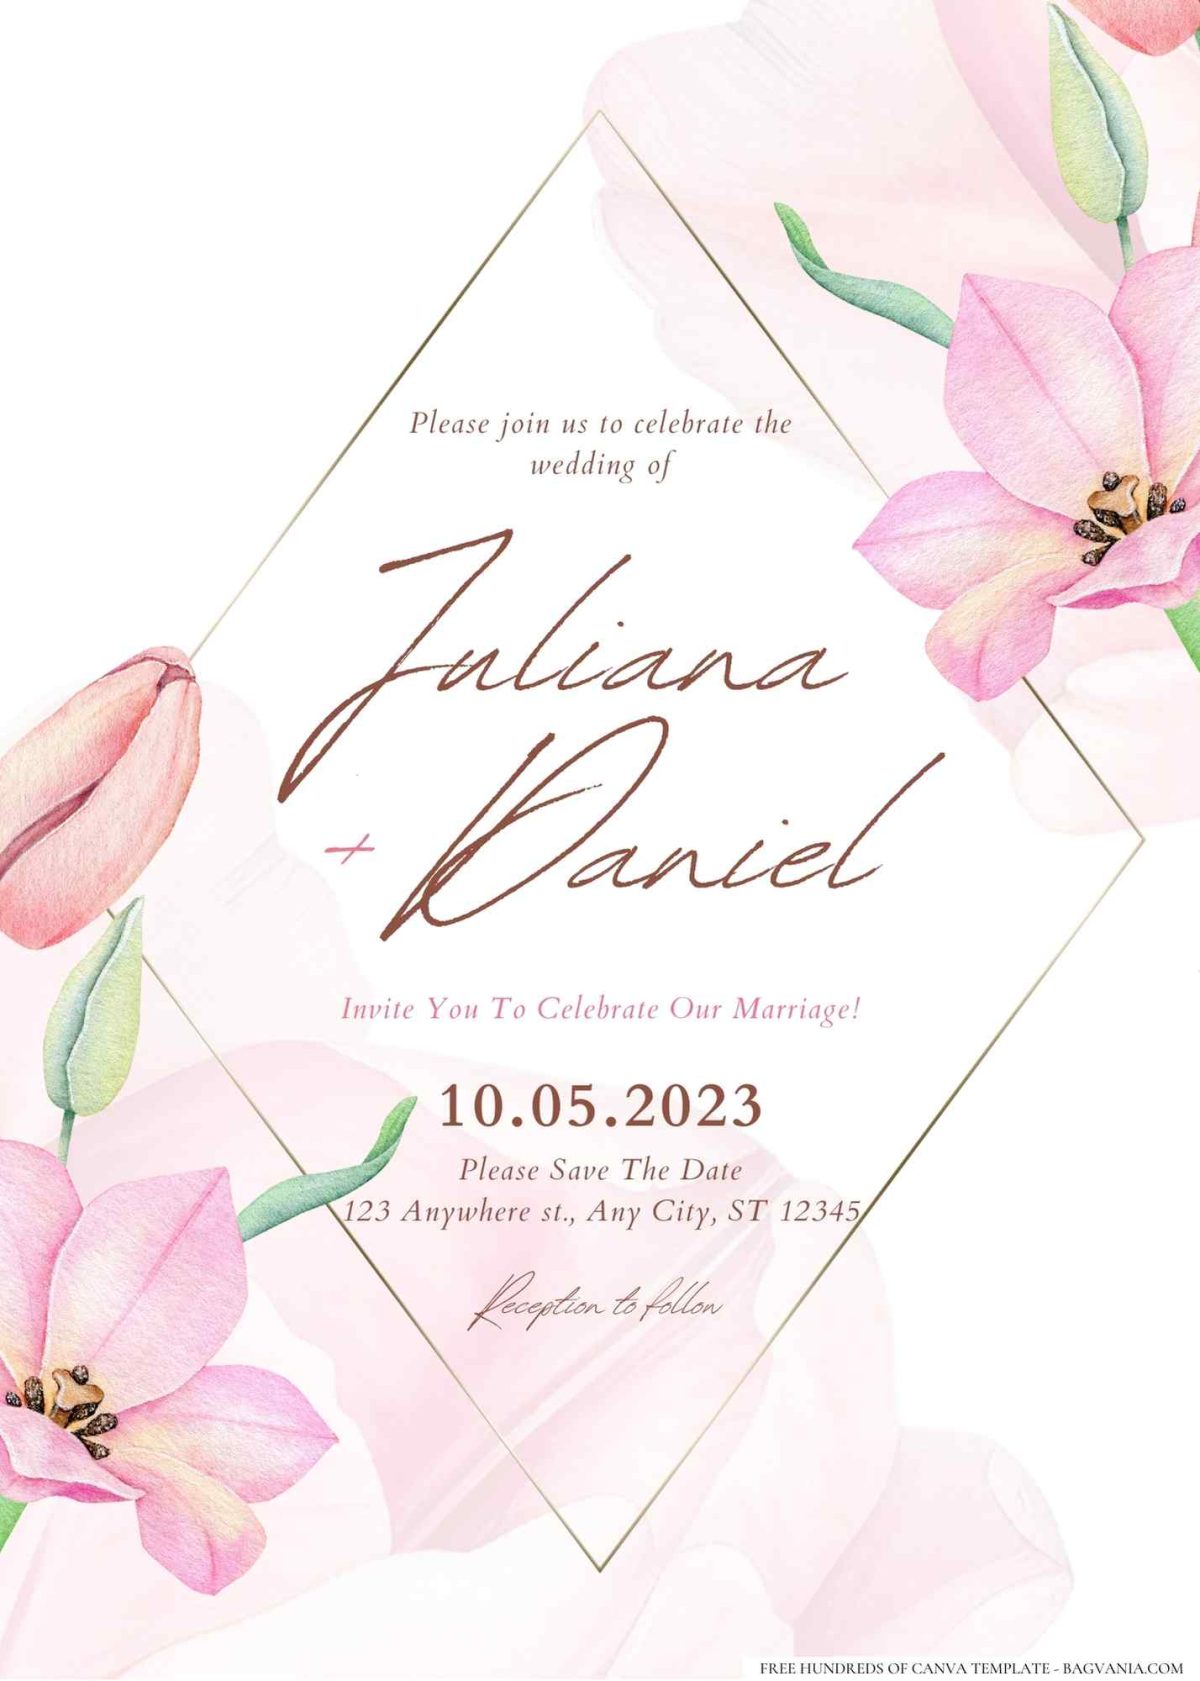 FREE Editable Pink Tulip Watercolor Floral Graphics Wedding Invitation